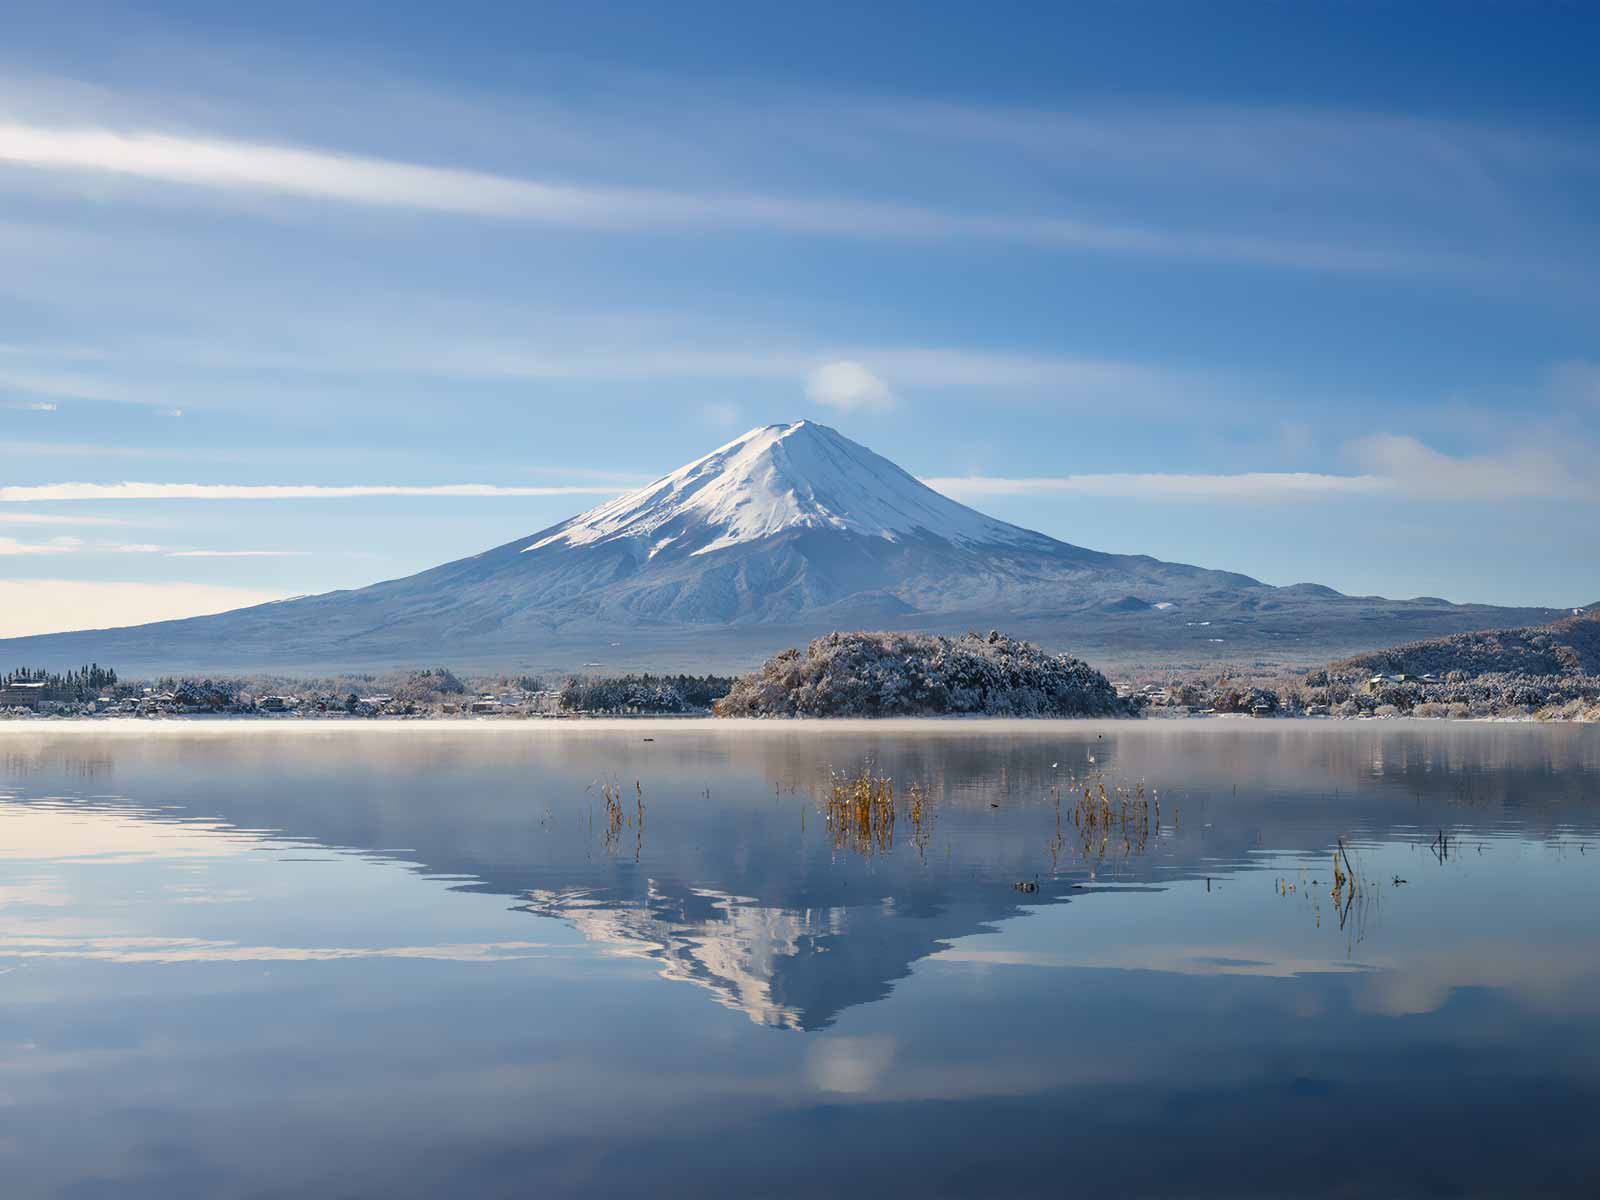 Mt. Fuji in Winter